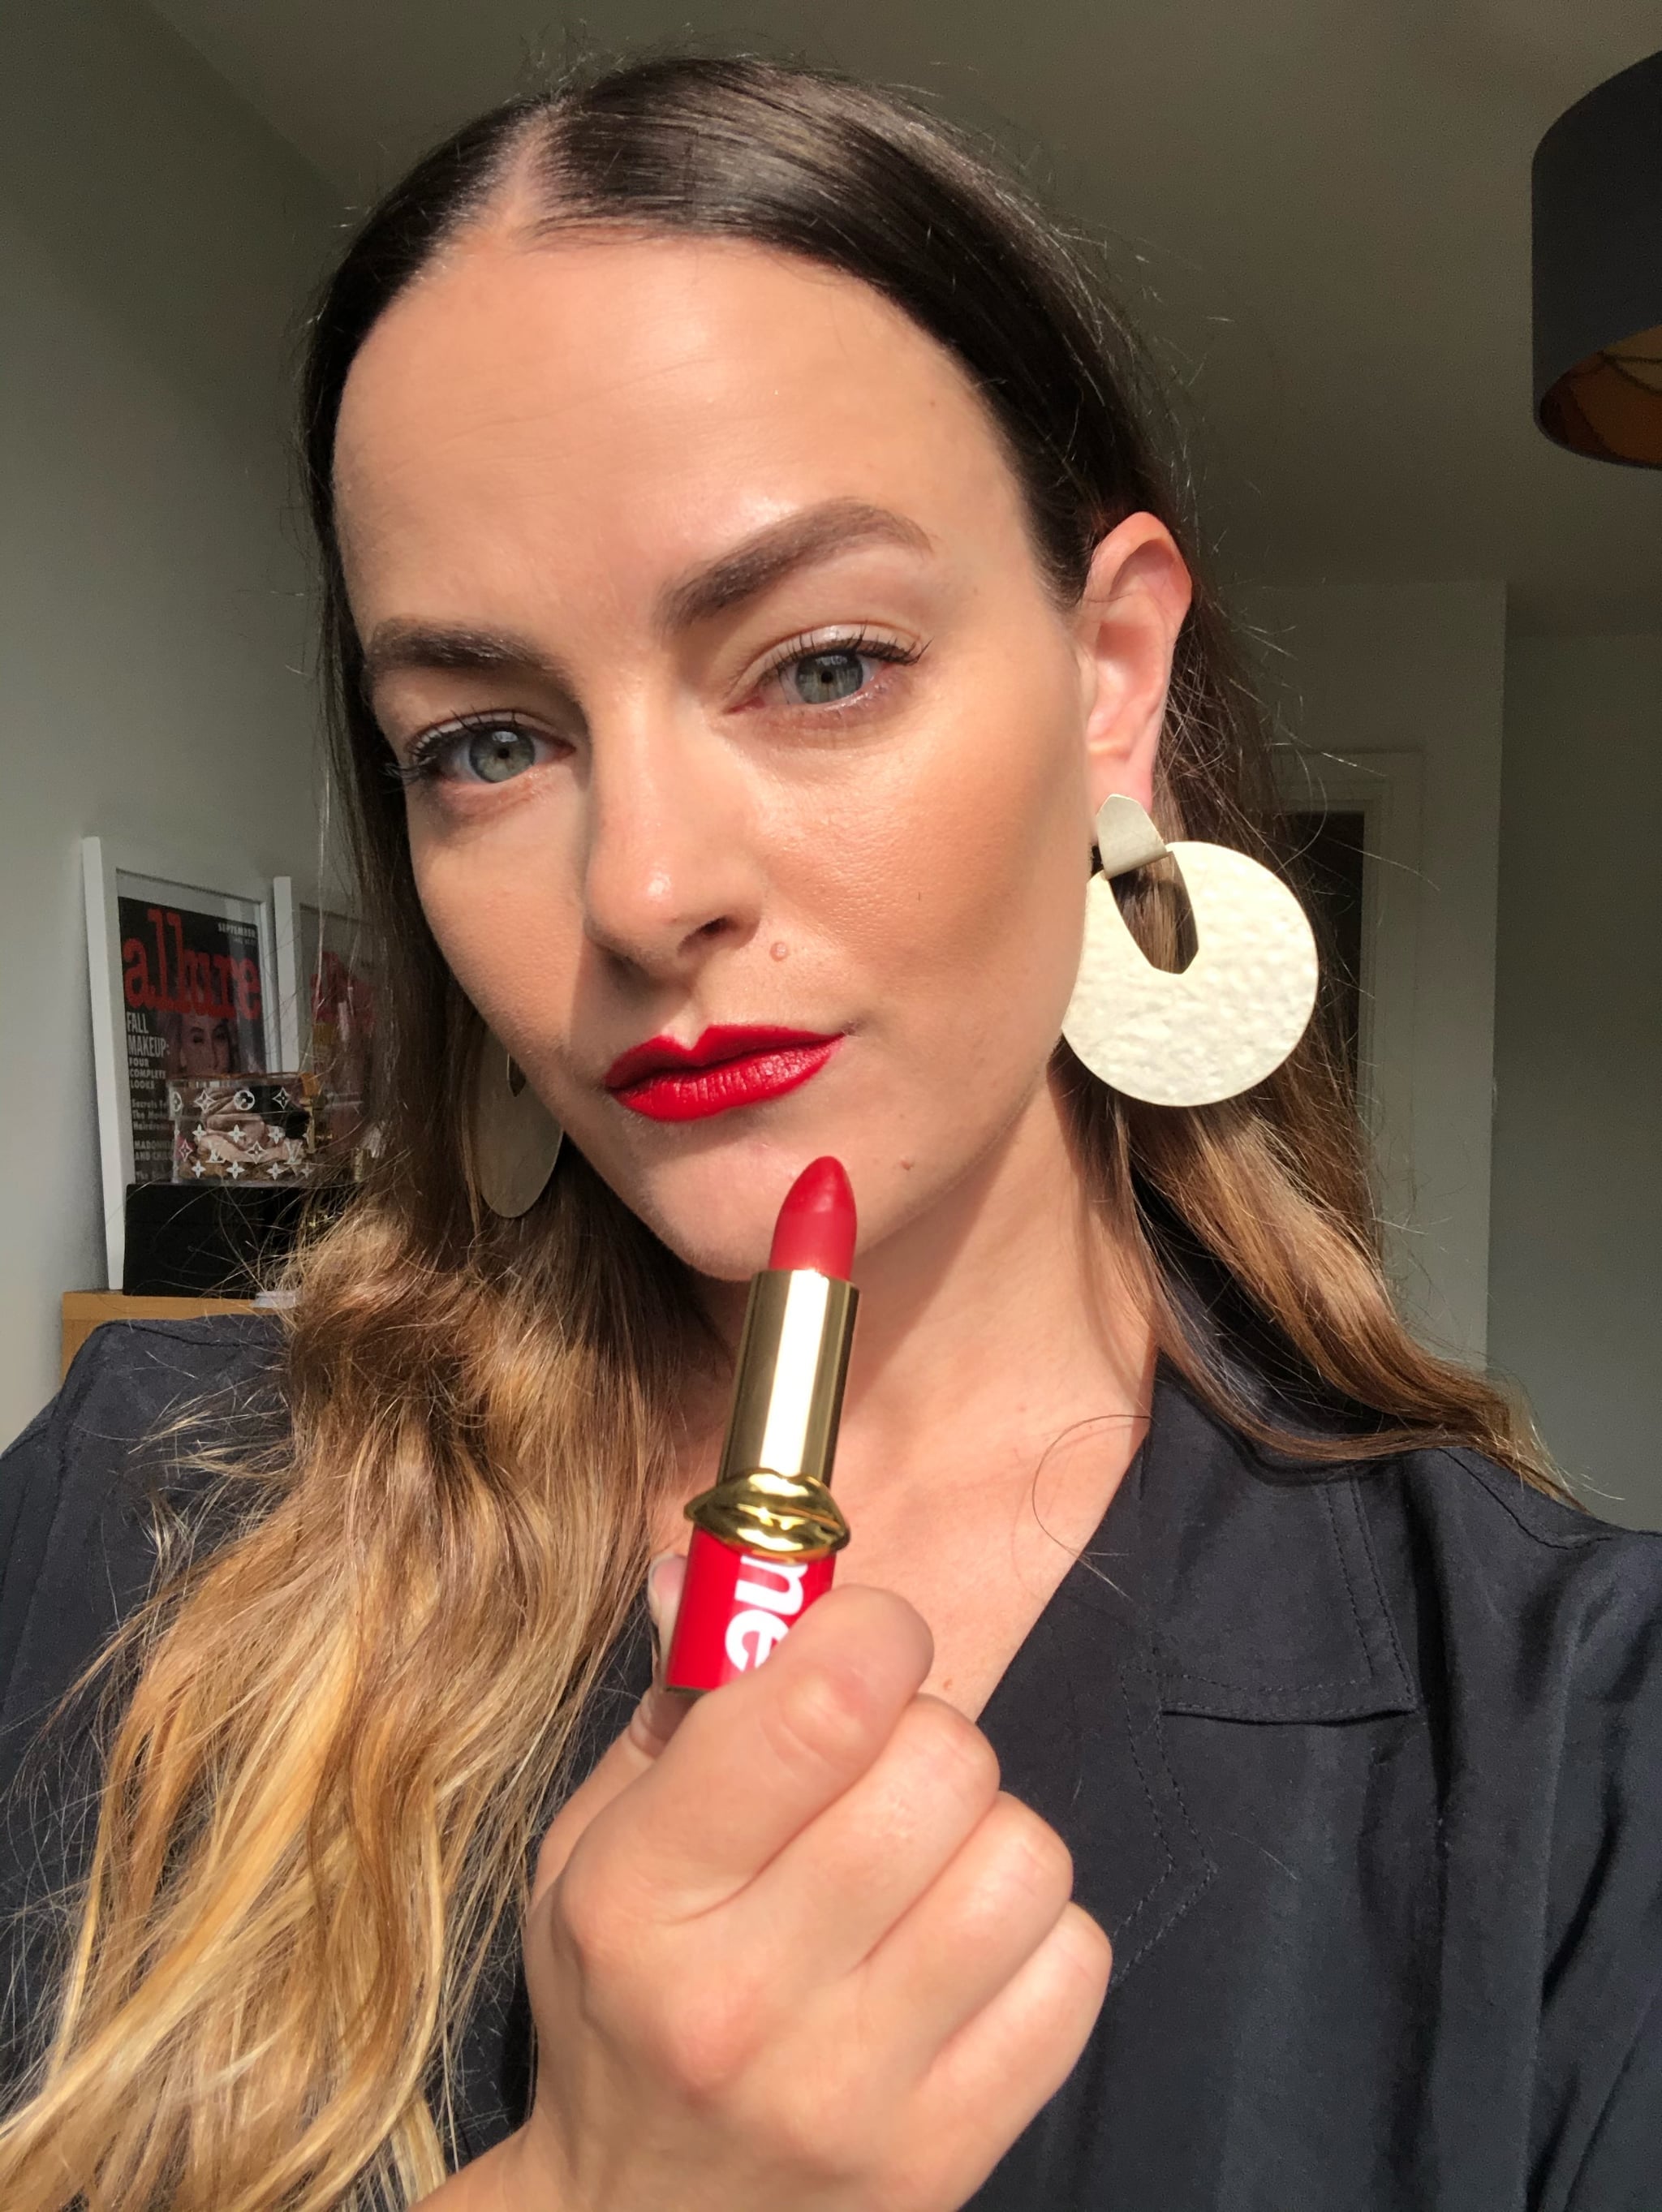 Supreme/Pat McGrath Labs Lipstick